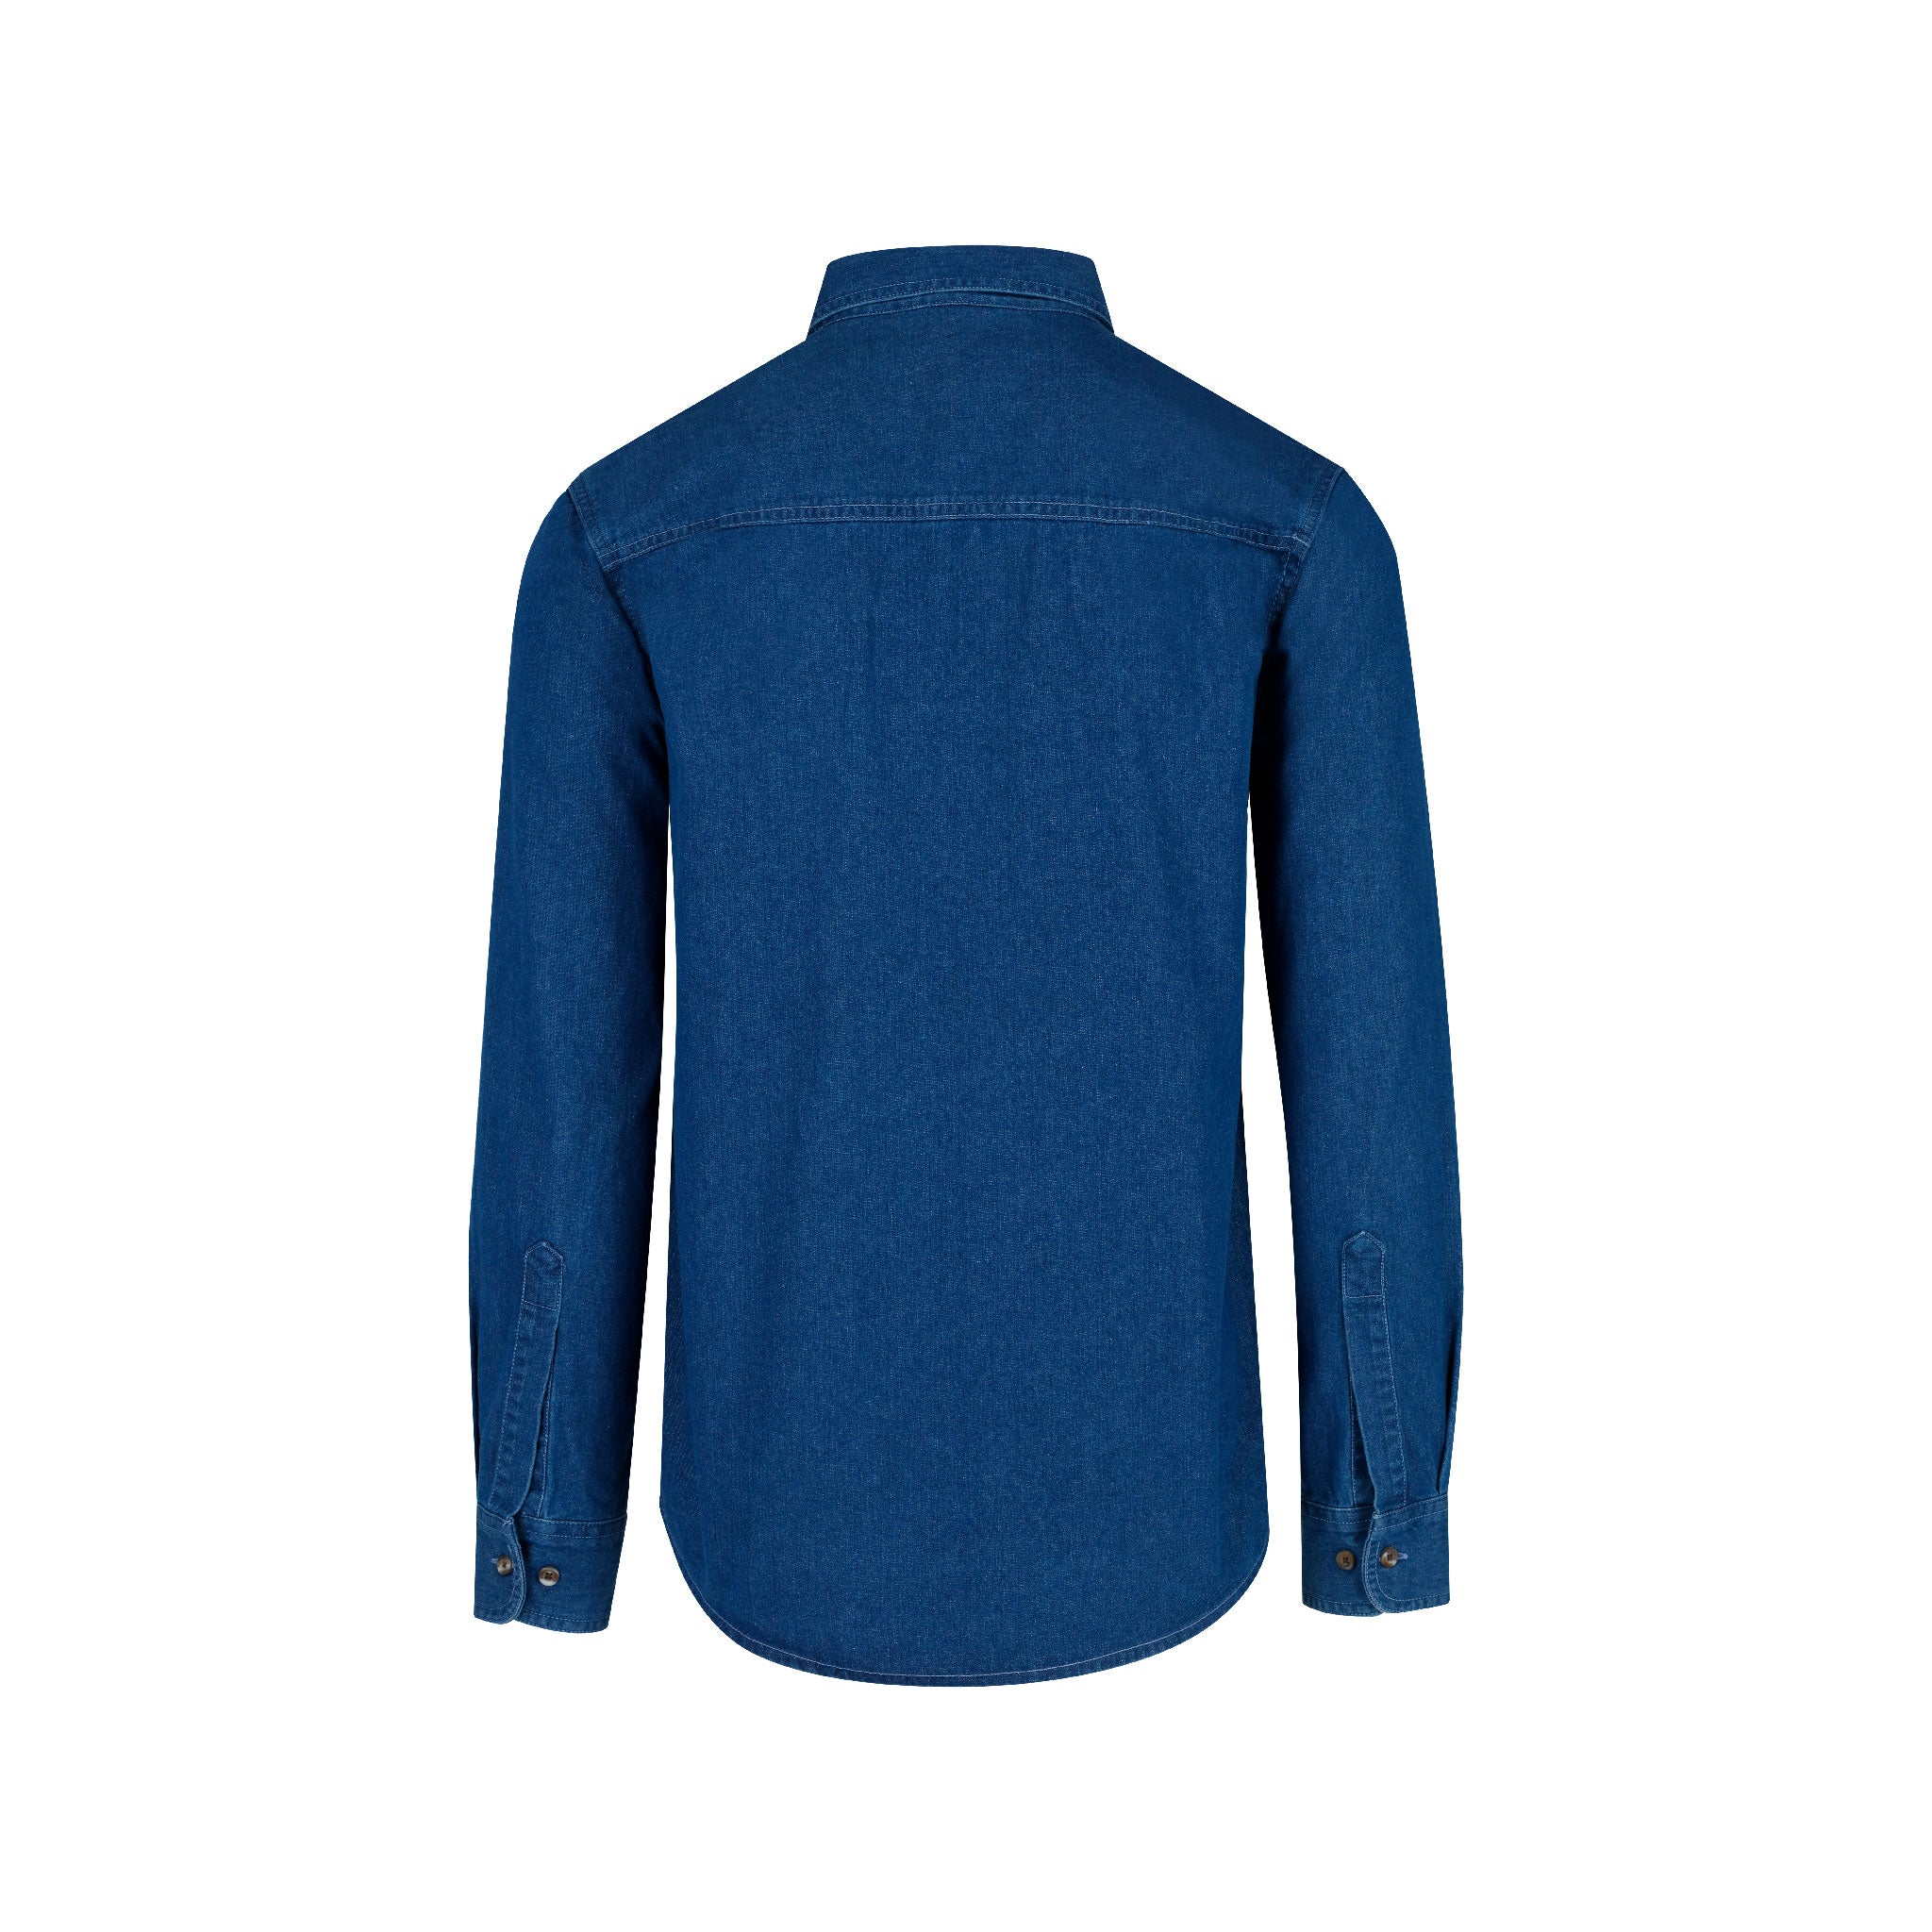 Gravity Threads Mens Long-Sleeve Denim Shirt - Ink Blue - Medium 